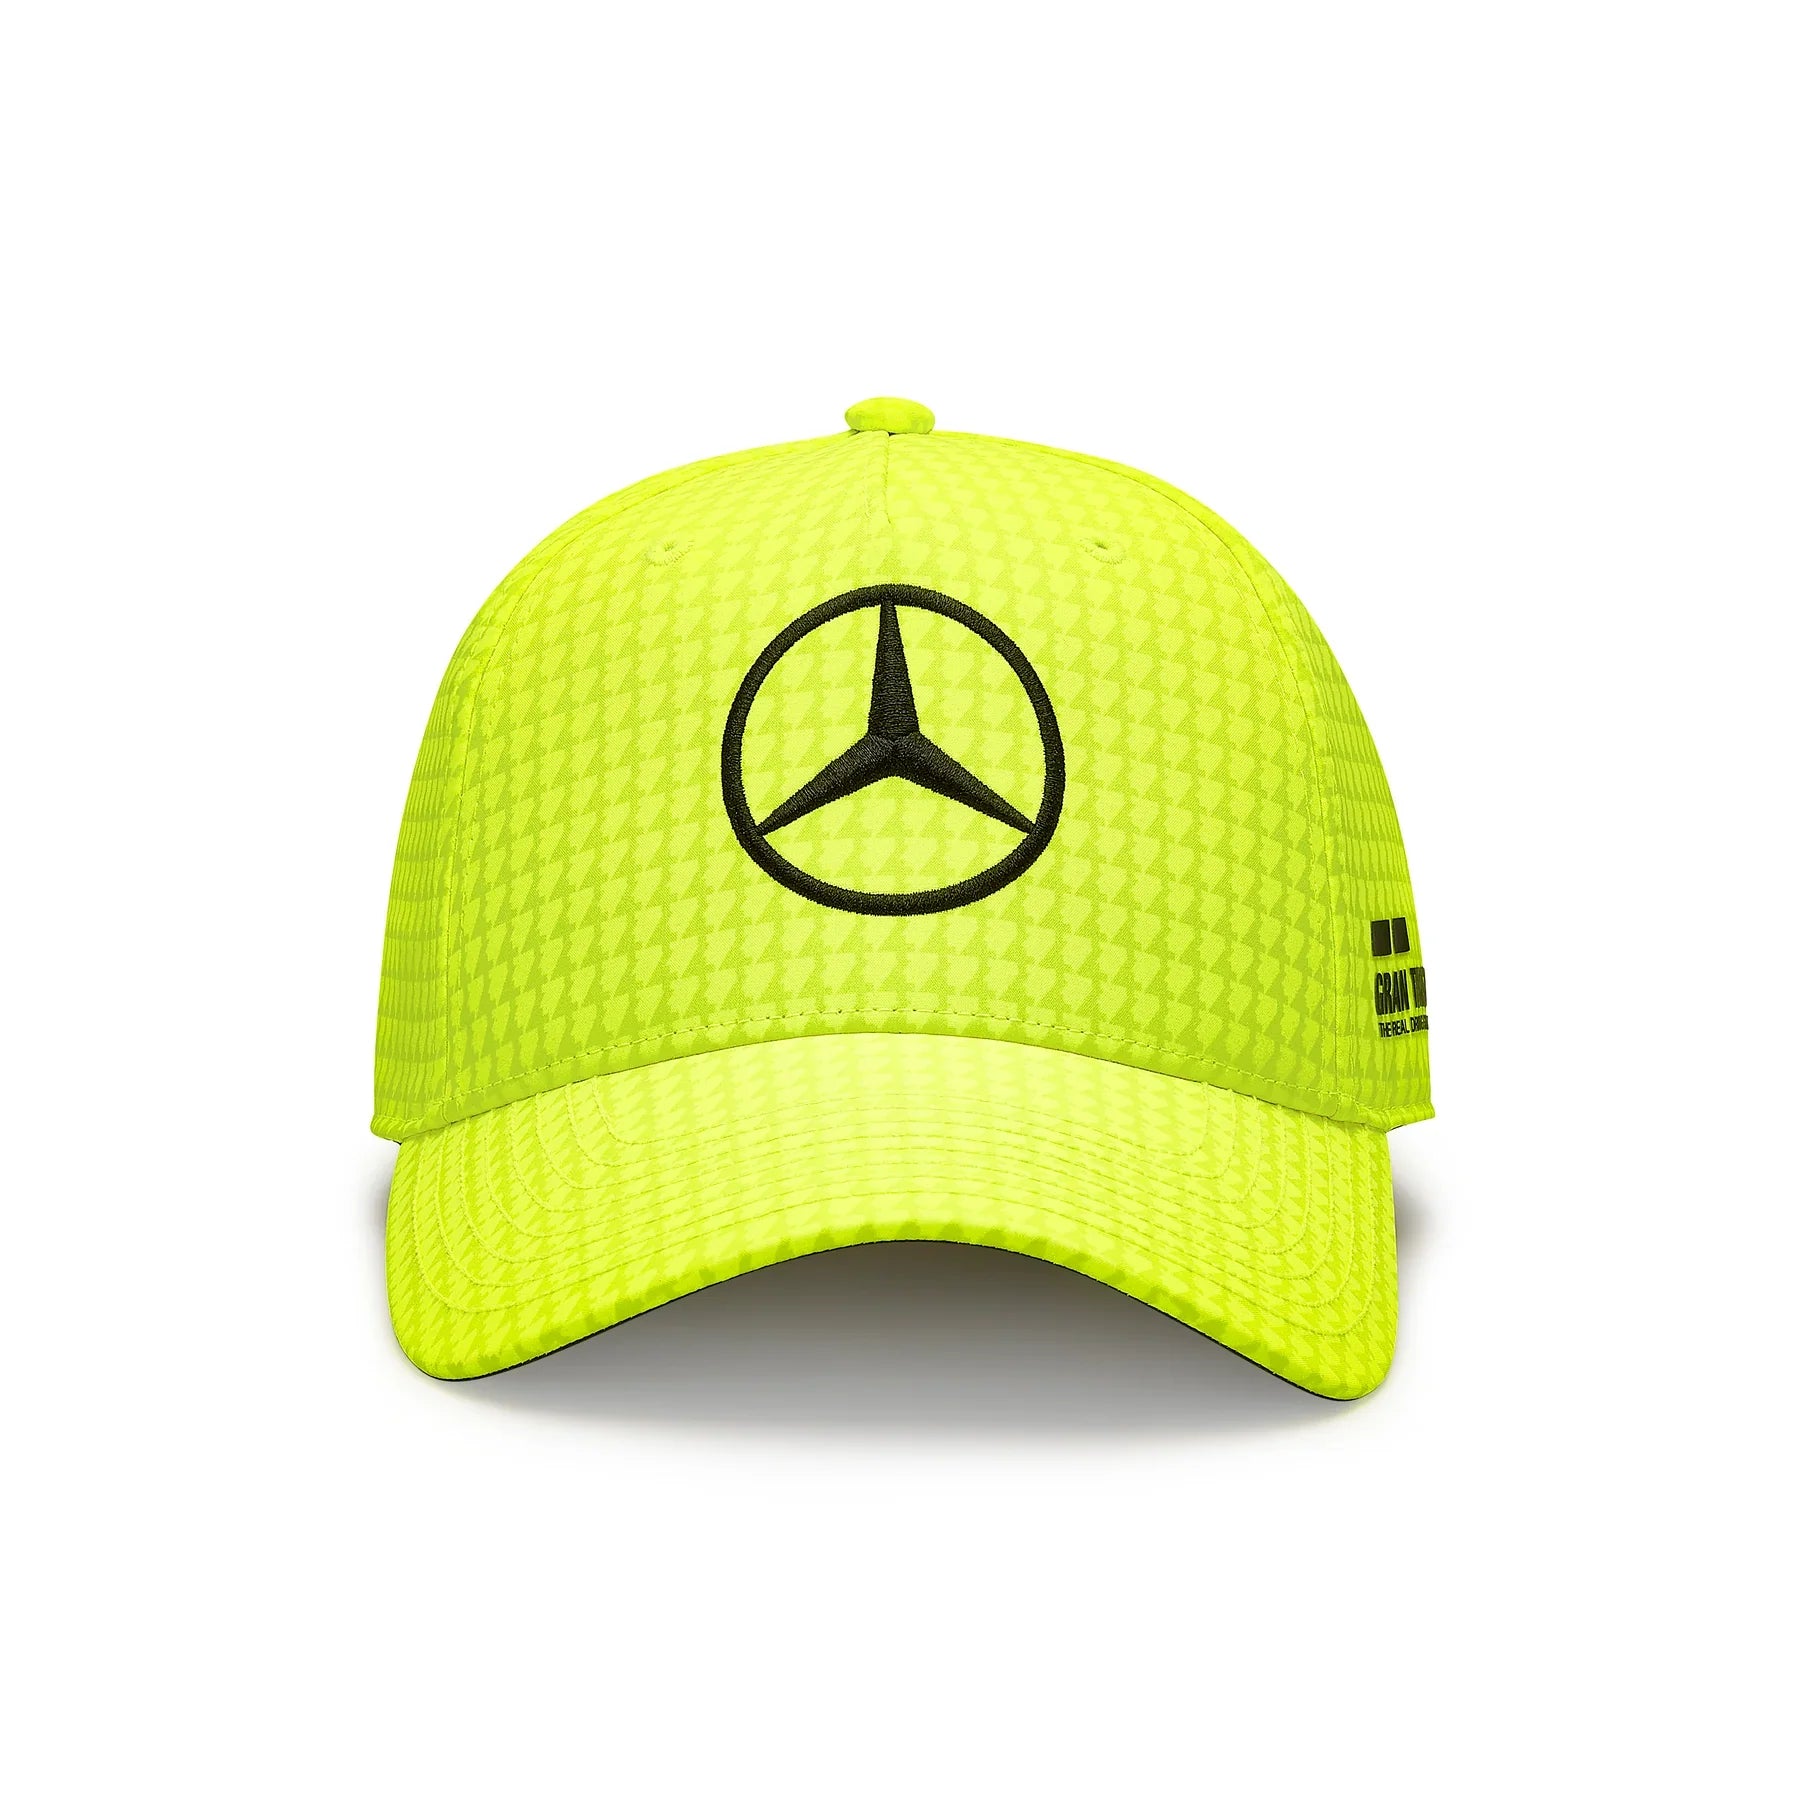 Mercedes AMG Petronas F1 KIDS Special Edition Lewis Hamilton Canada GP Hat Neon Yellow